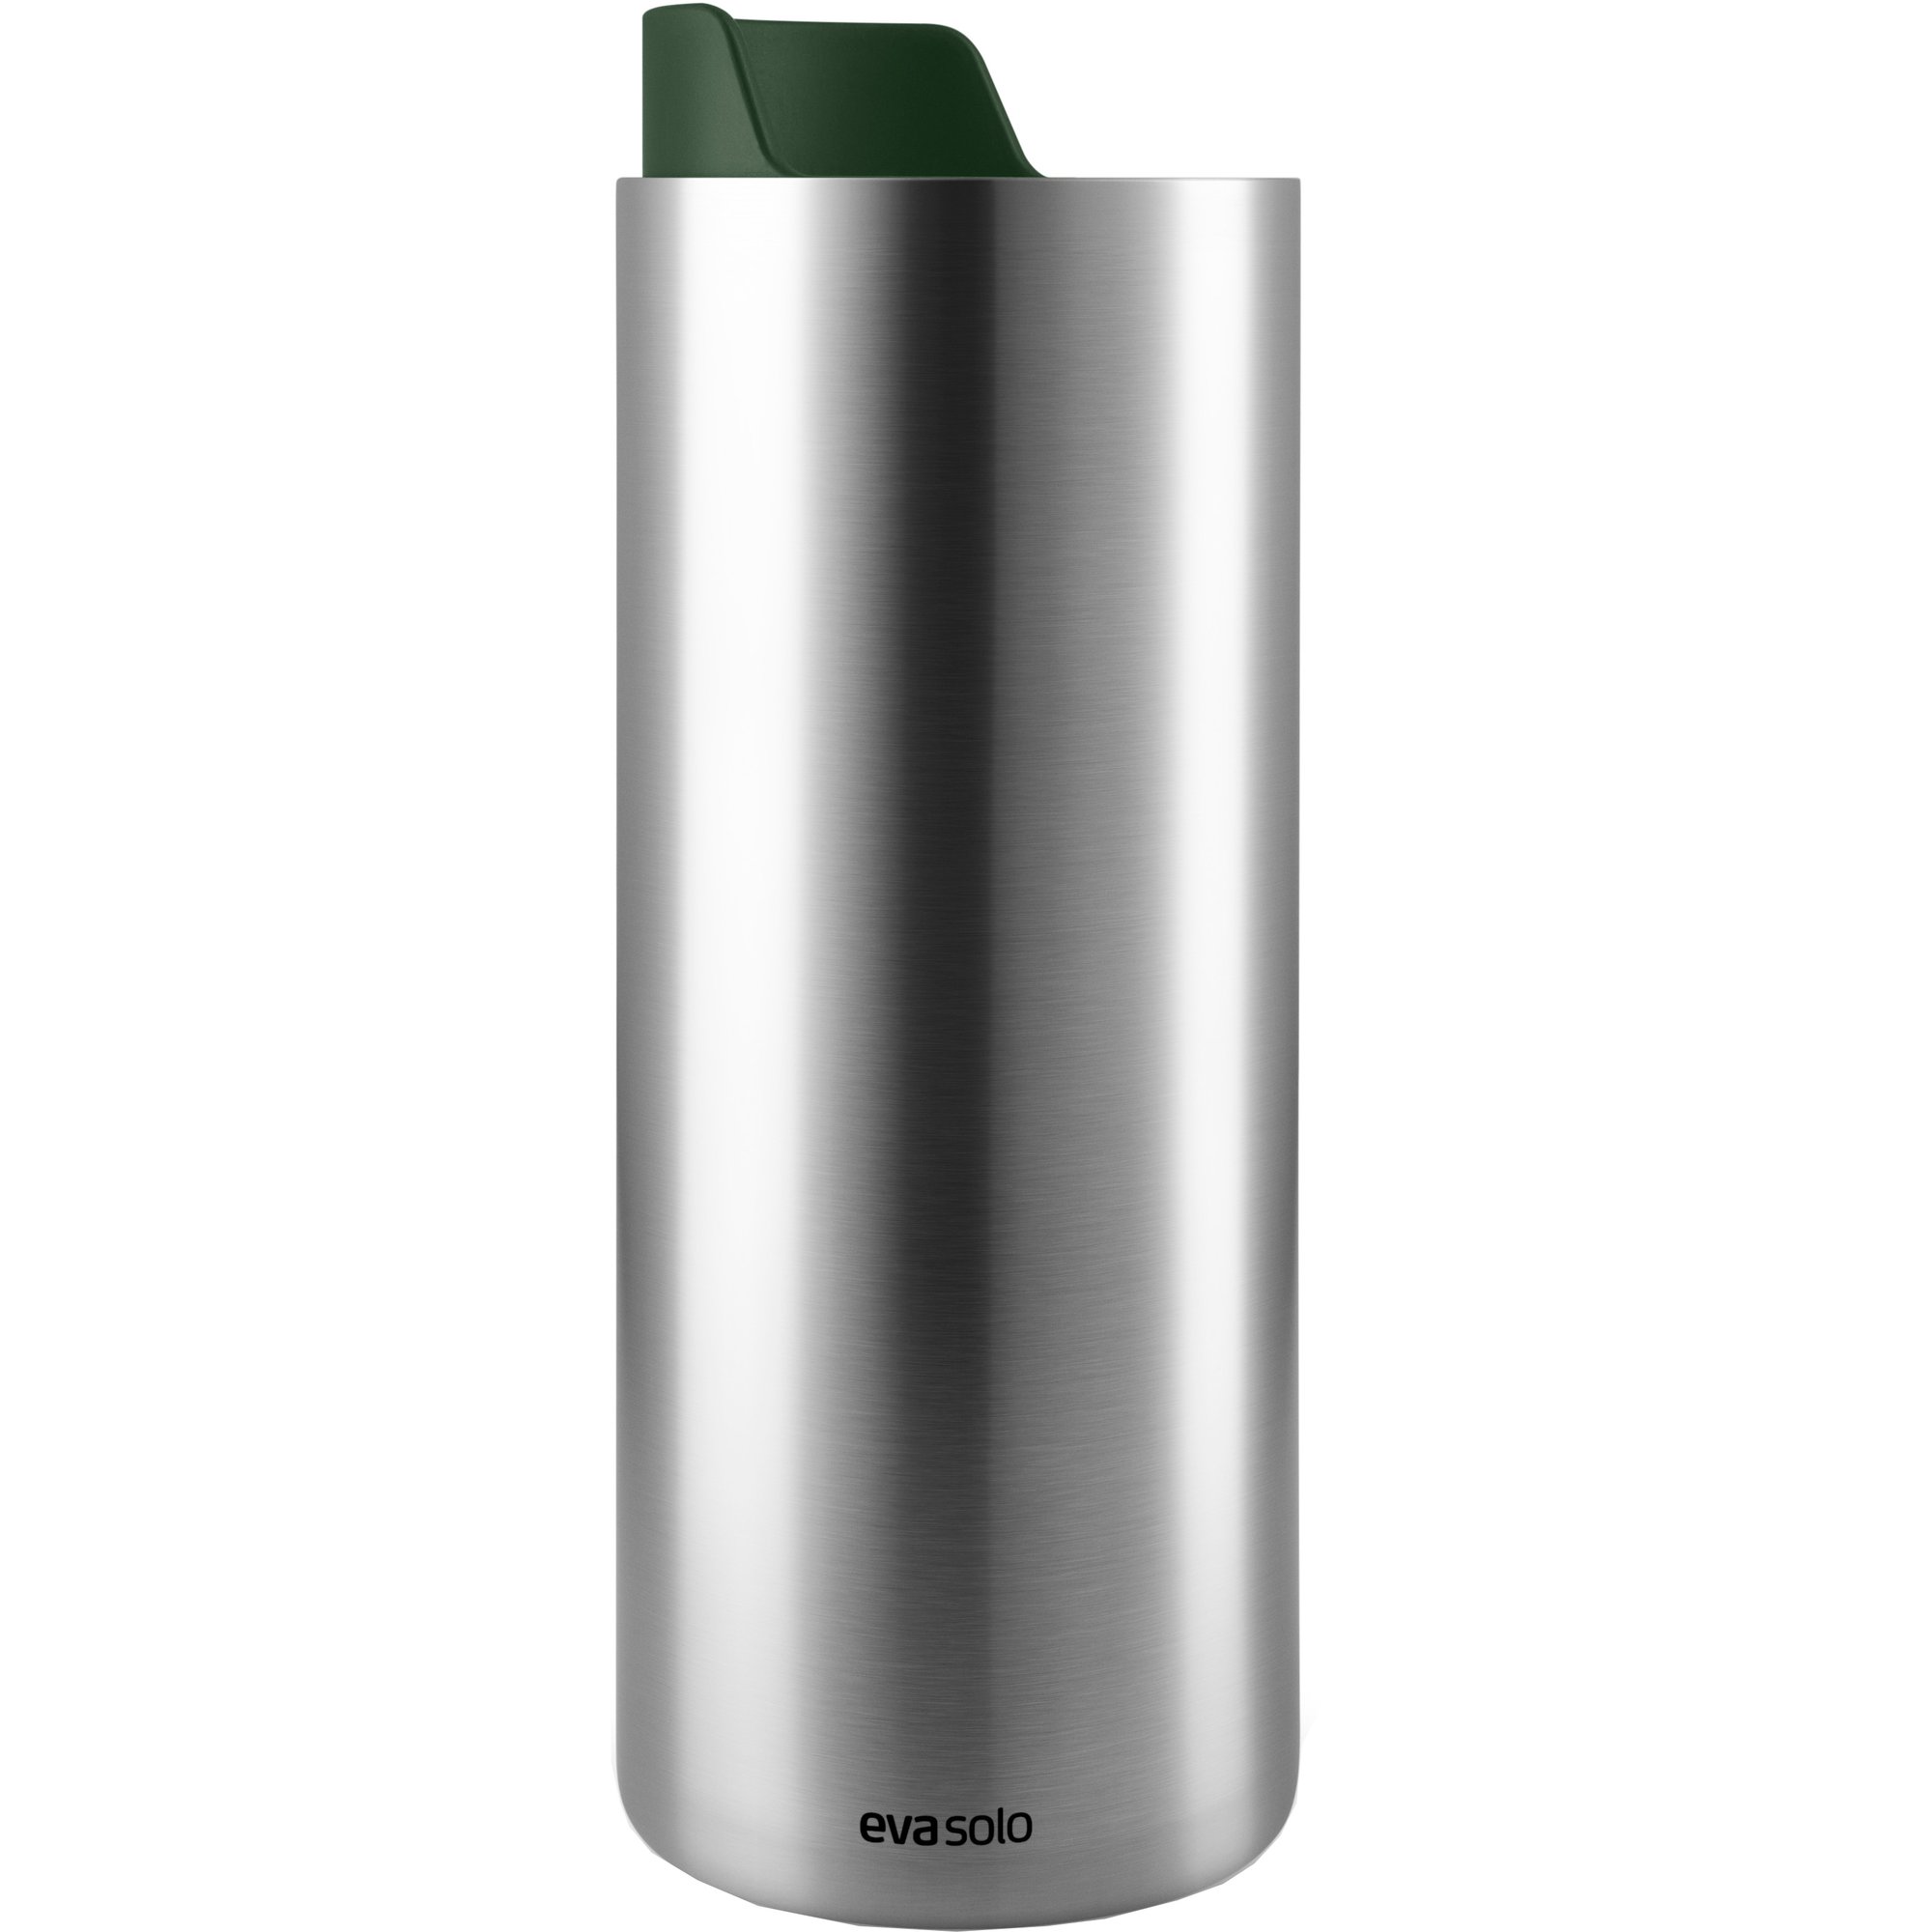 Eva Solo Urban To Go Cup Recycled termokopp 0,35 liter, emerald green Termokrus